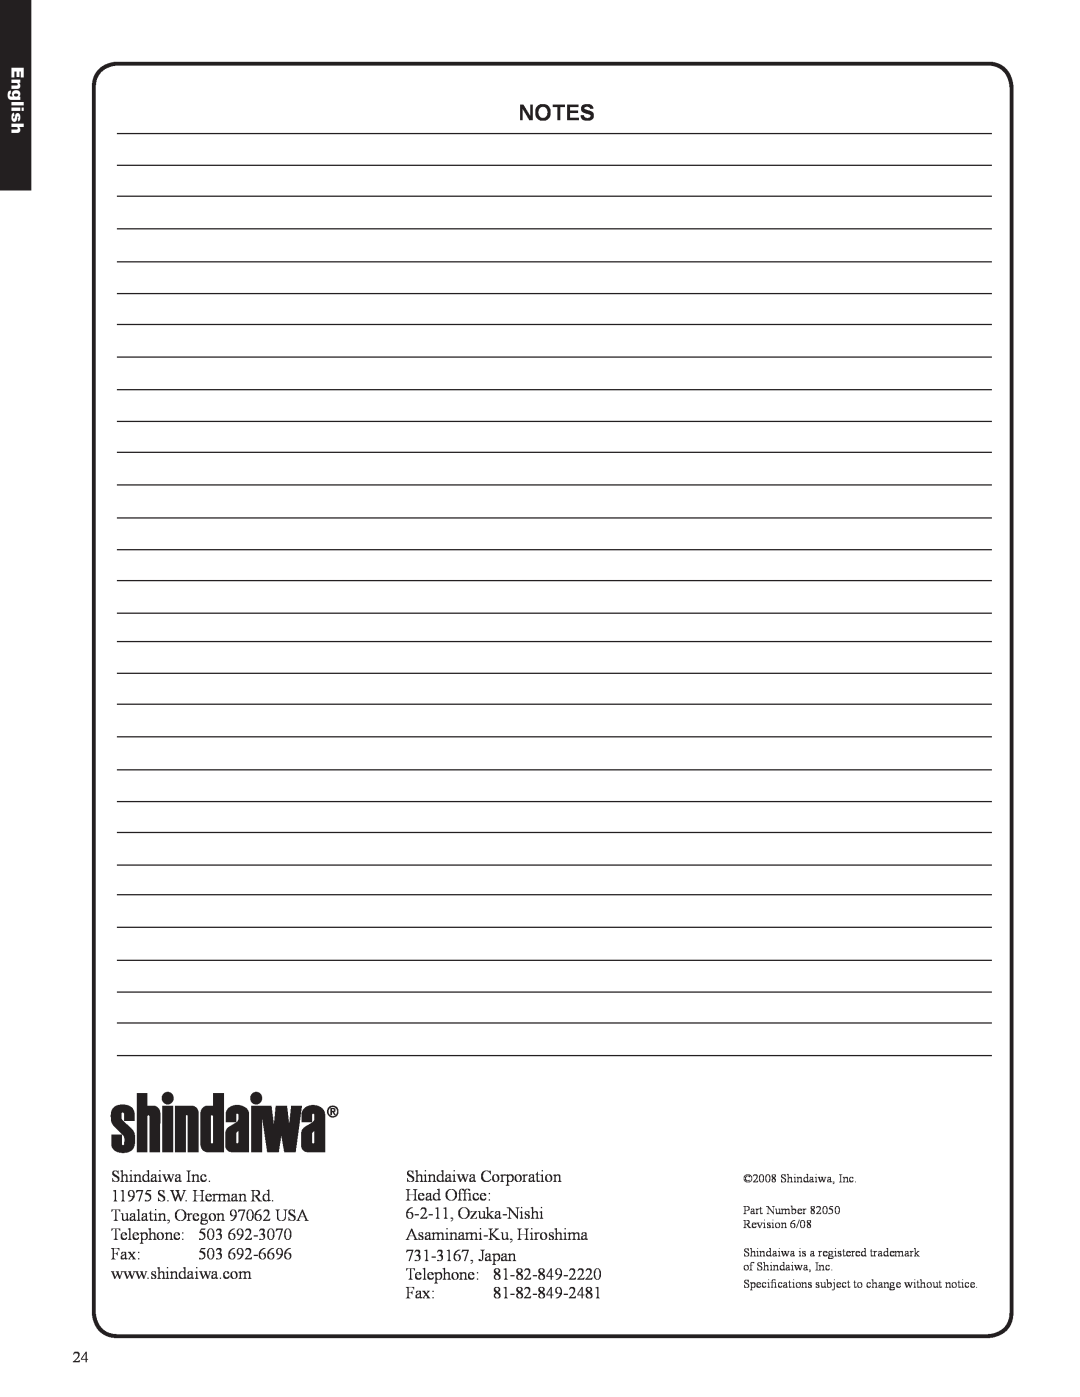 Shindaiwa EB633RT, 82050 manual notes, English 